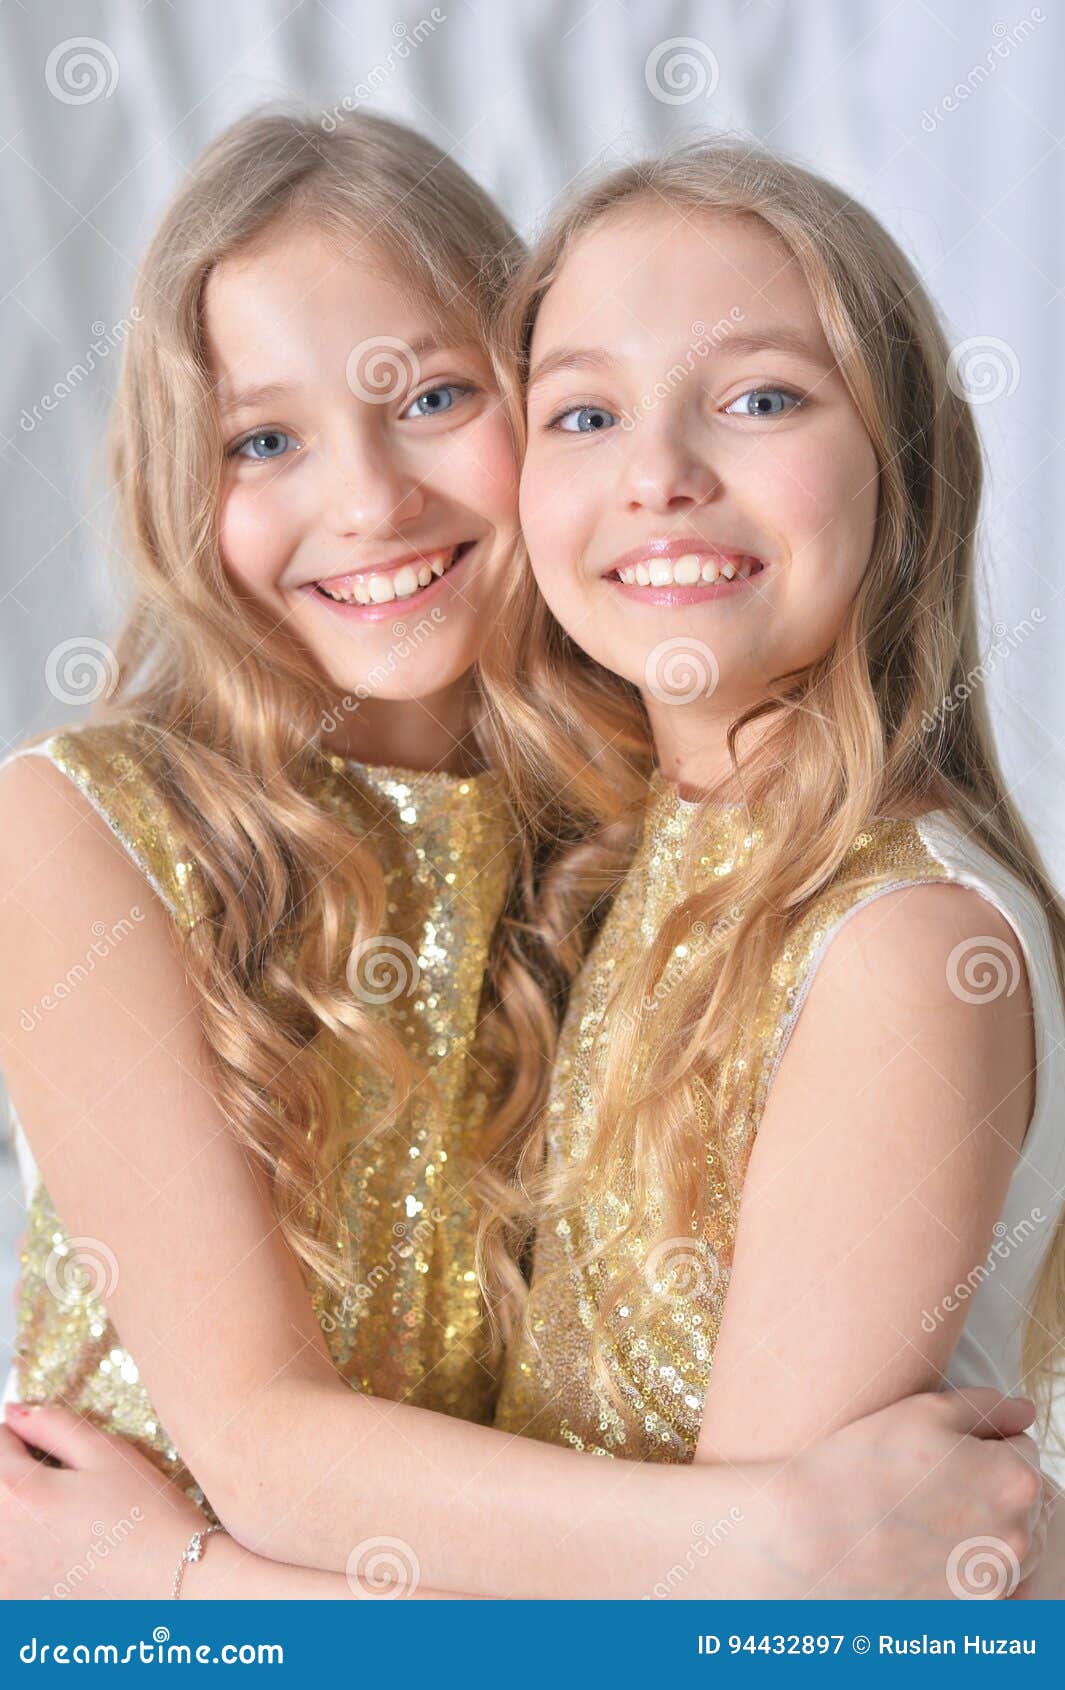 cute twin sisters